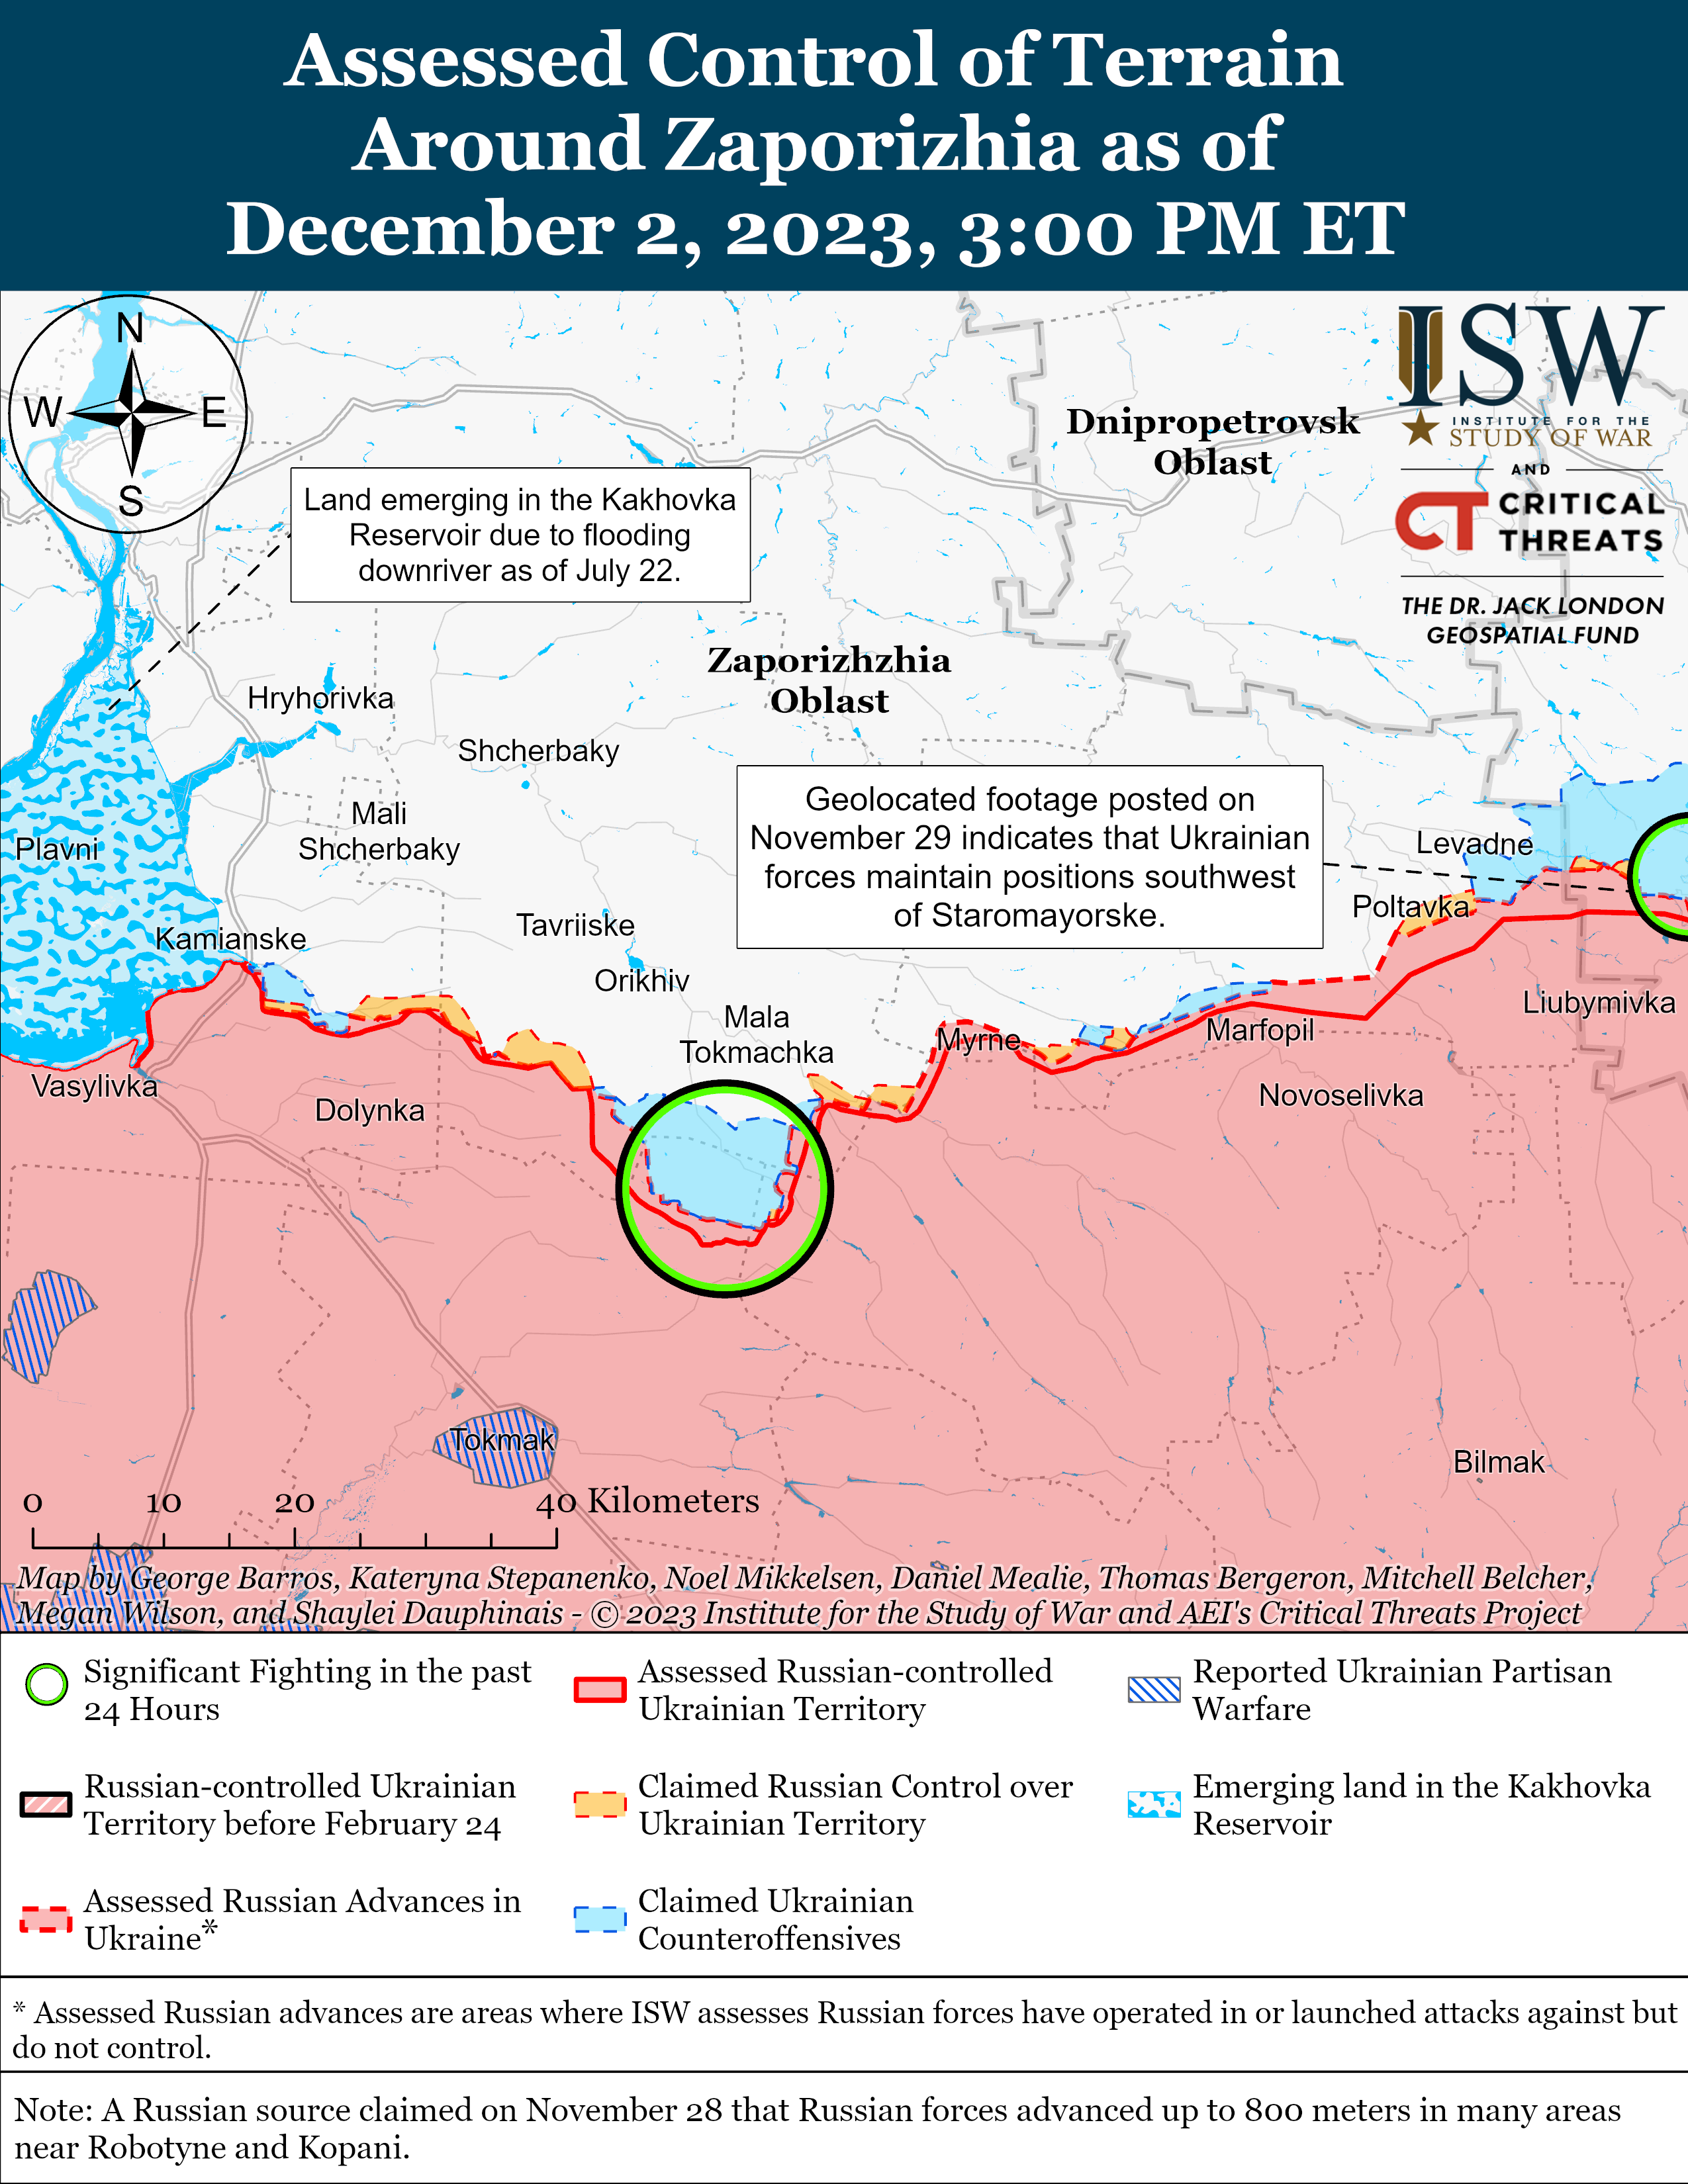 ВСУ продолжают операции на левом берегу Херсонской области: карты ISW